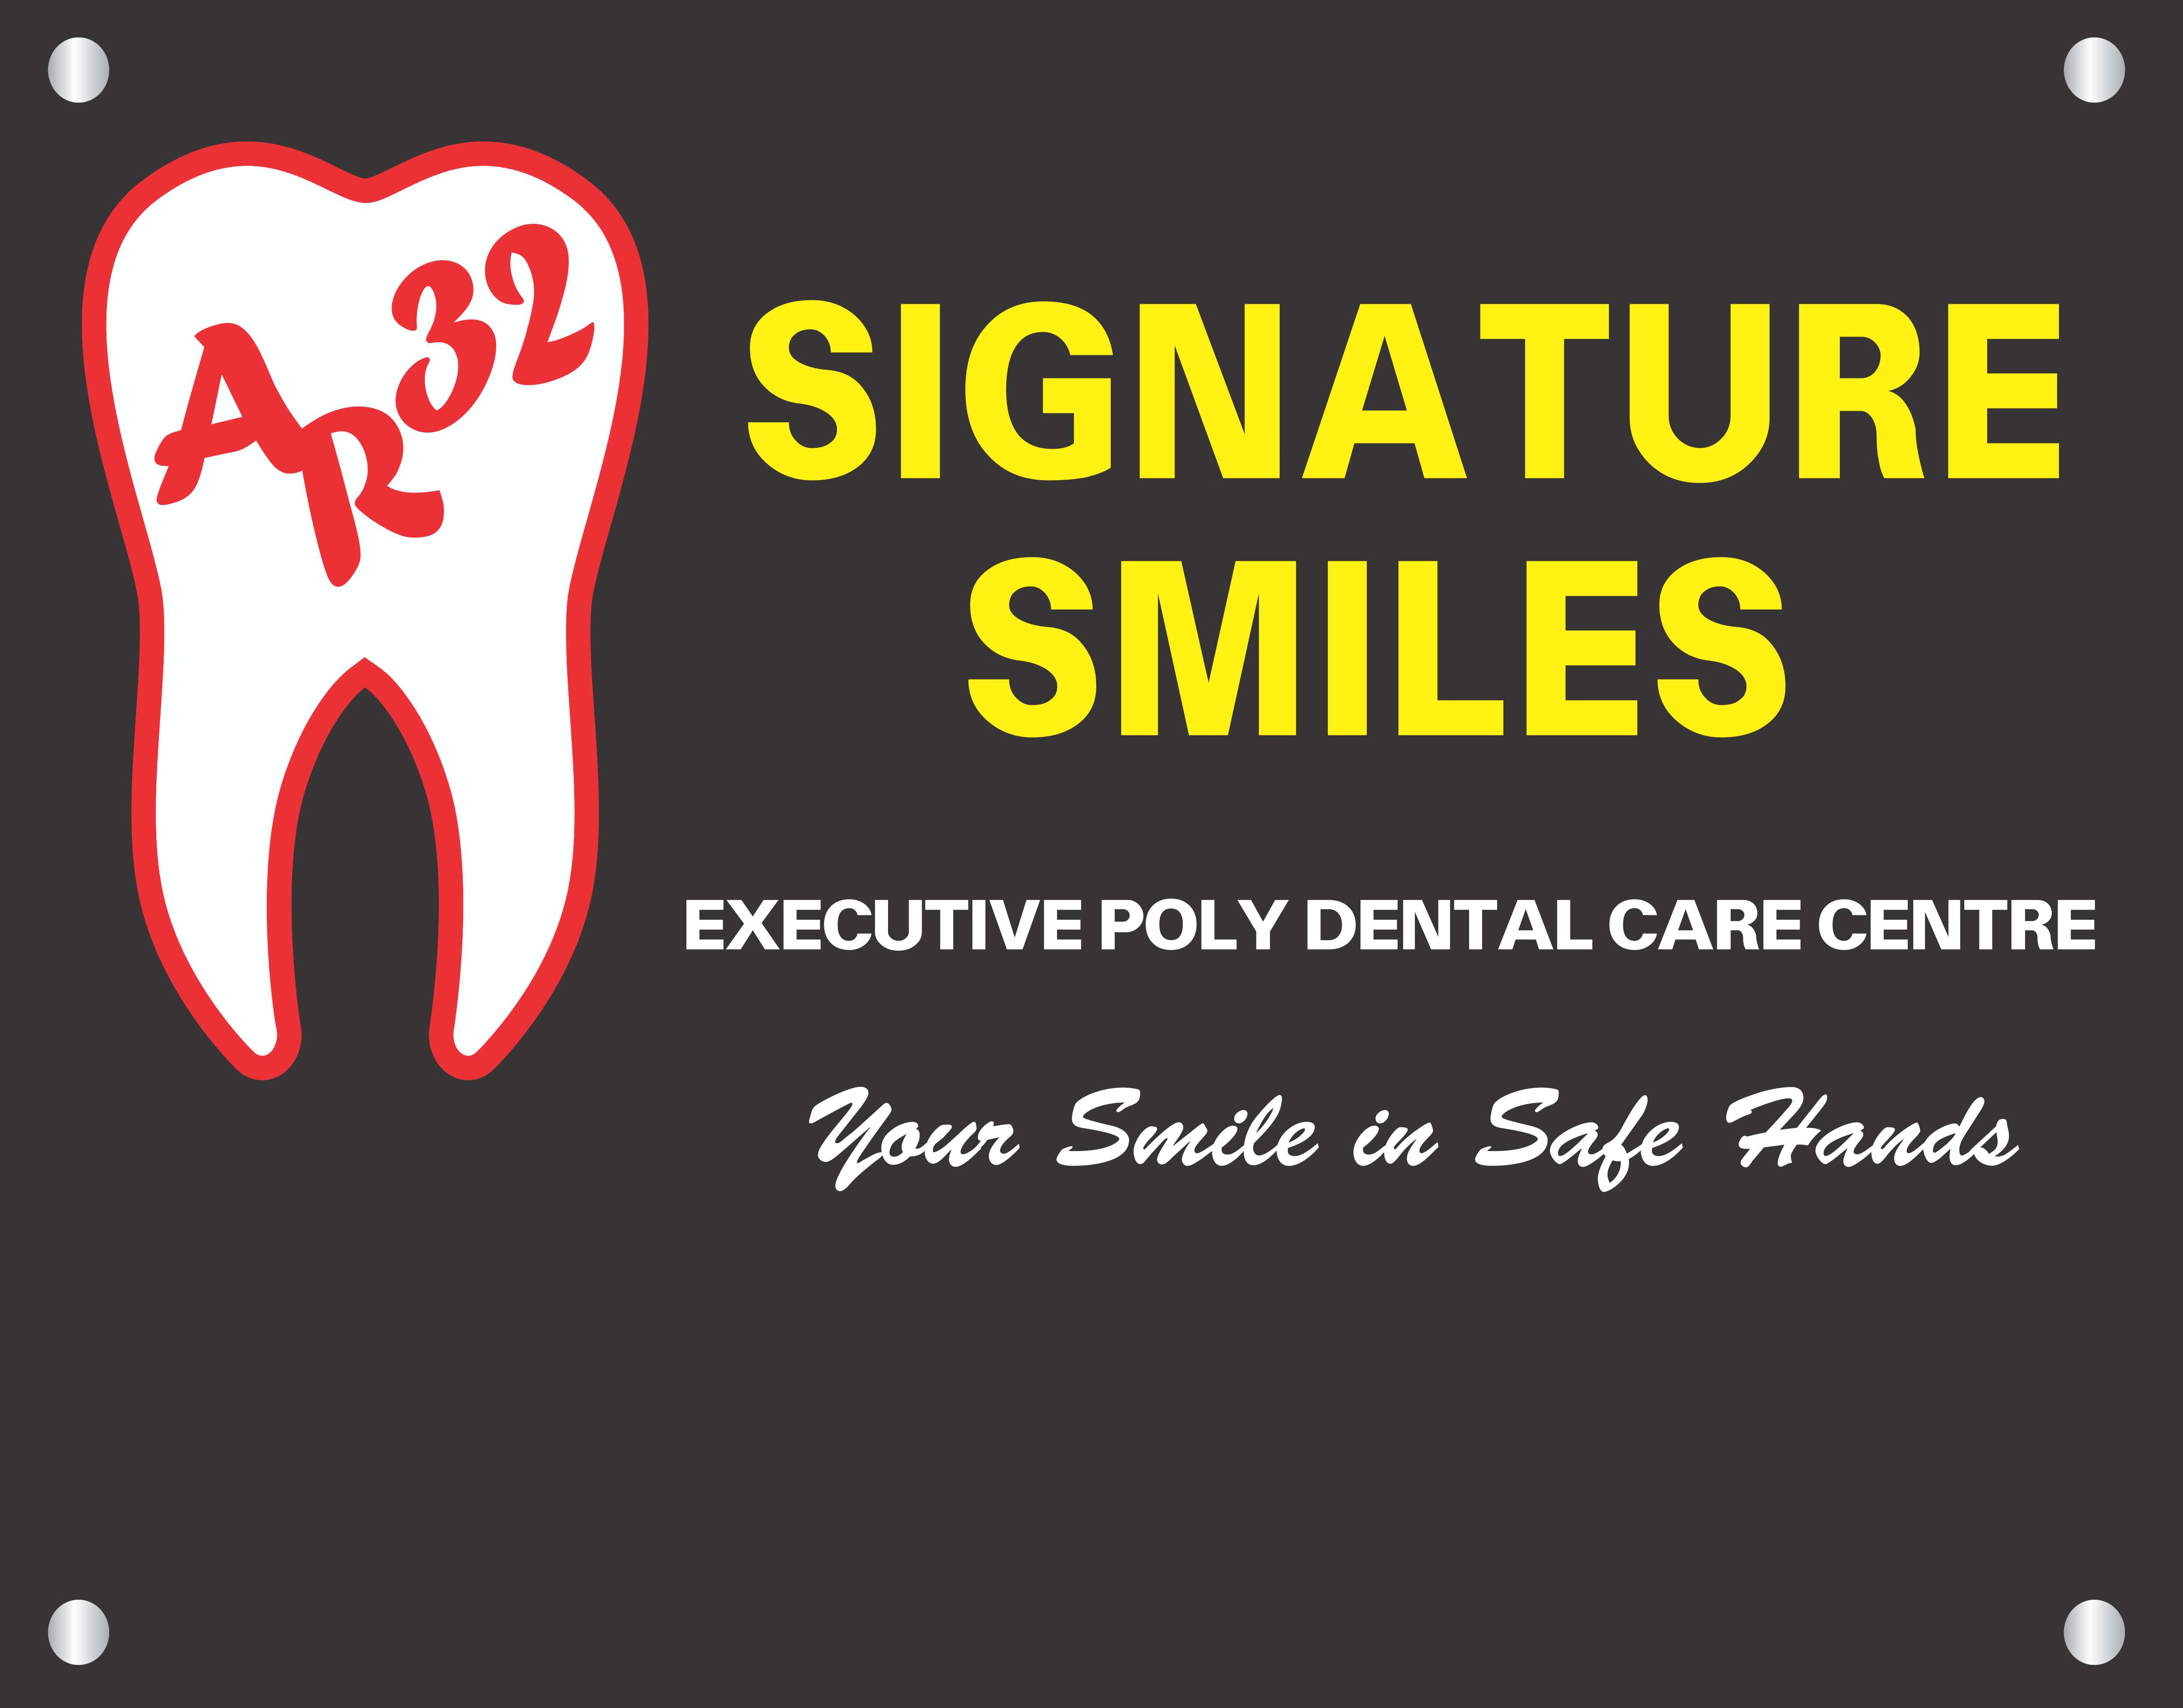 AR 32 Signature Smiles Dental Clinic|Healthcare|Medical Services